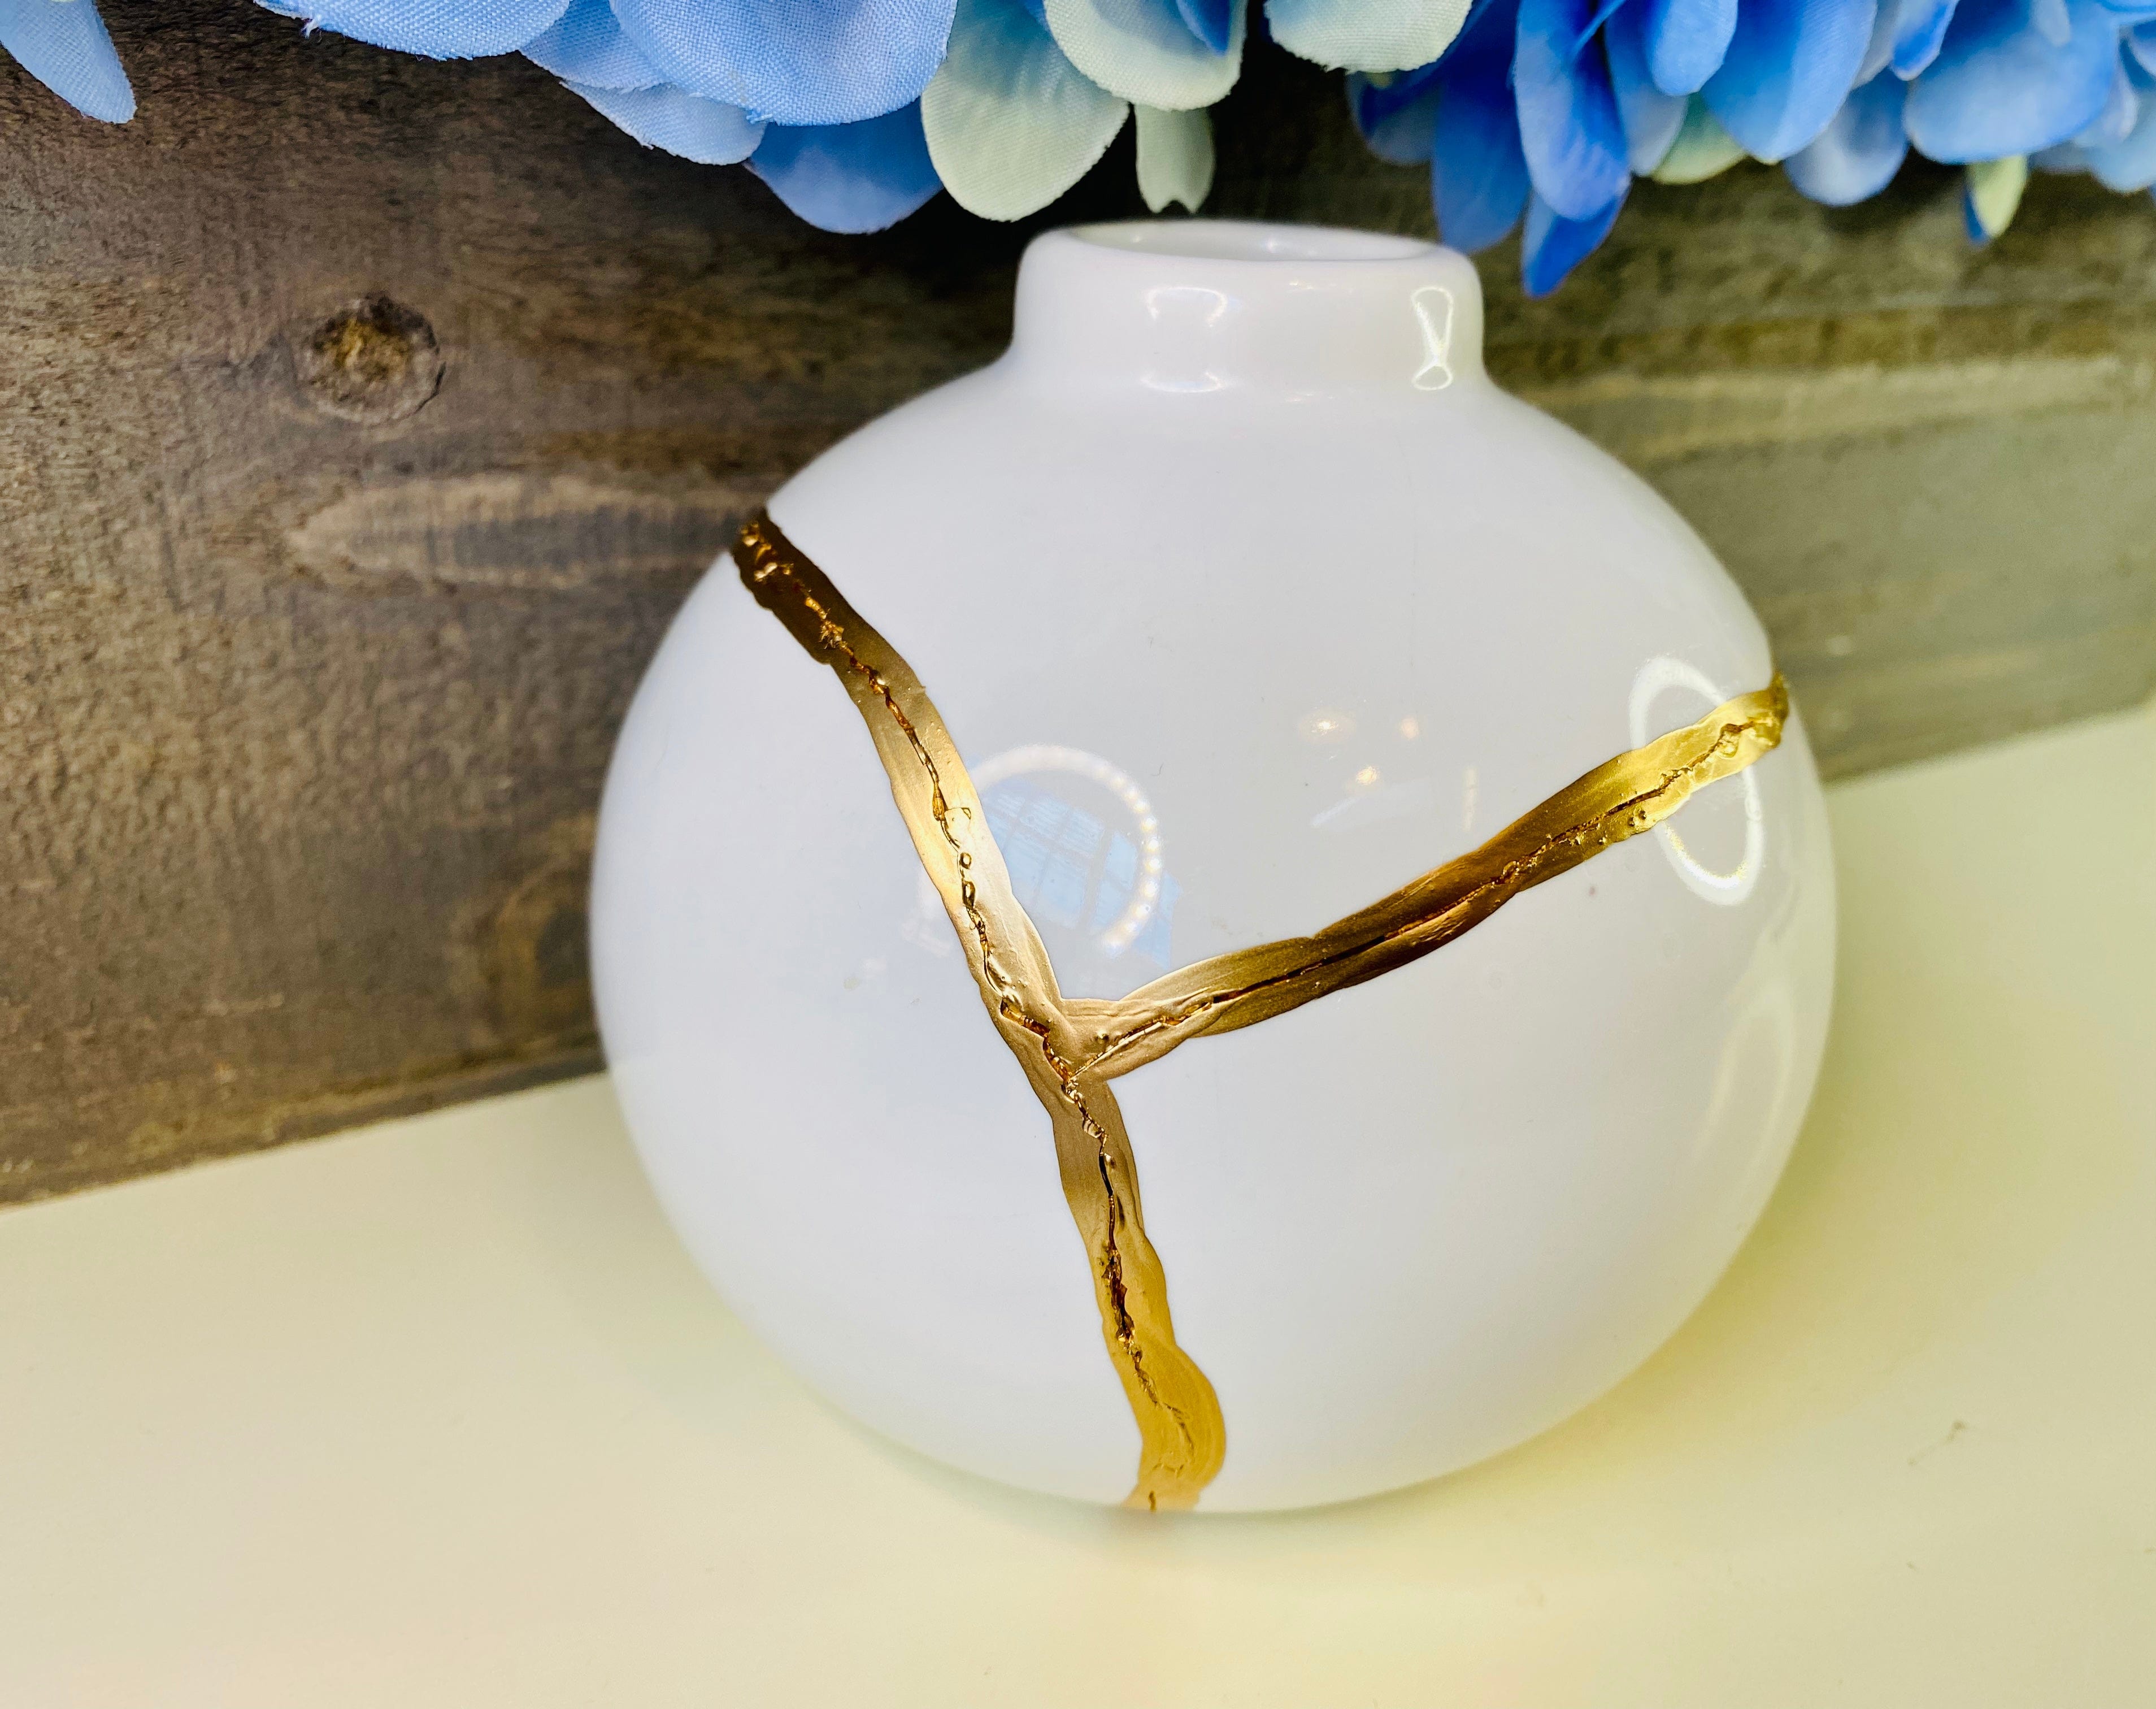 Kintsugi Vase, White Bud Vase, Kintsugi Gifts, Japanese Decor, Fine Art Ceramics, Minimalist, Home Decor, Kintsugi White Bud Vase